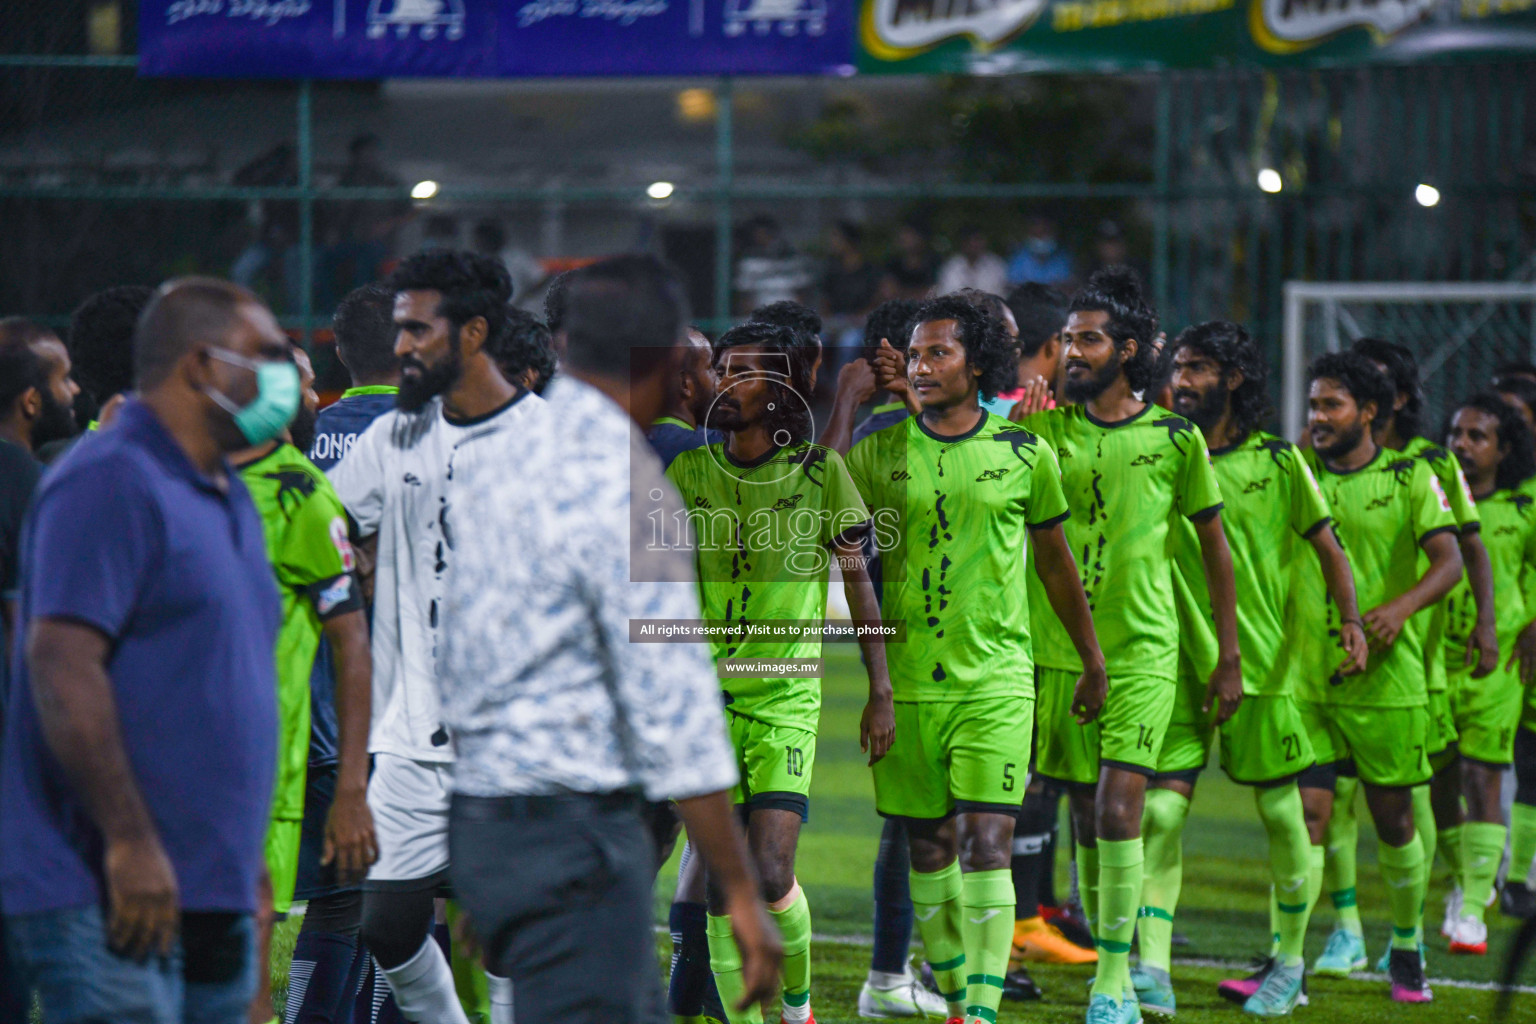 Club Maldives Day 8 - 29th November 2021, at Hulhumale. Photo: Ismail Thoriq / Images.mv